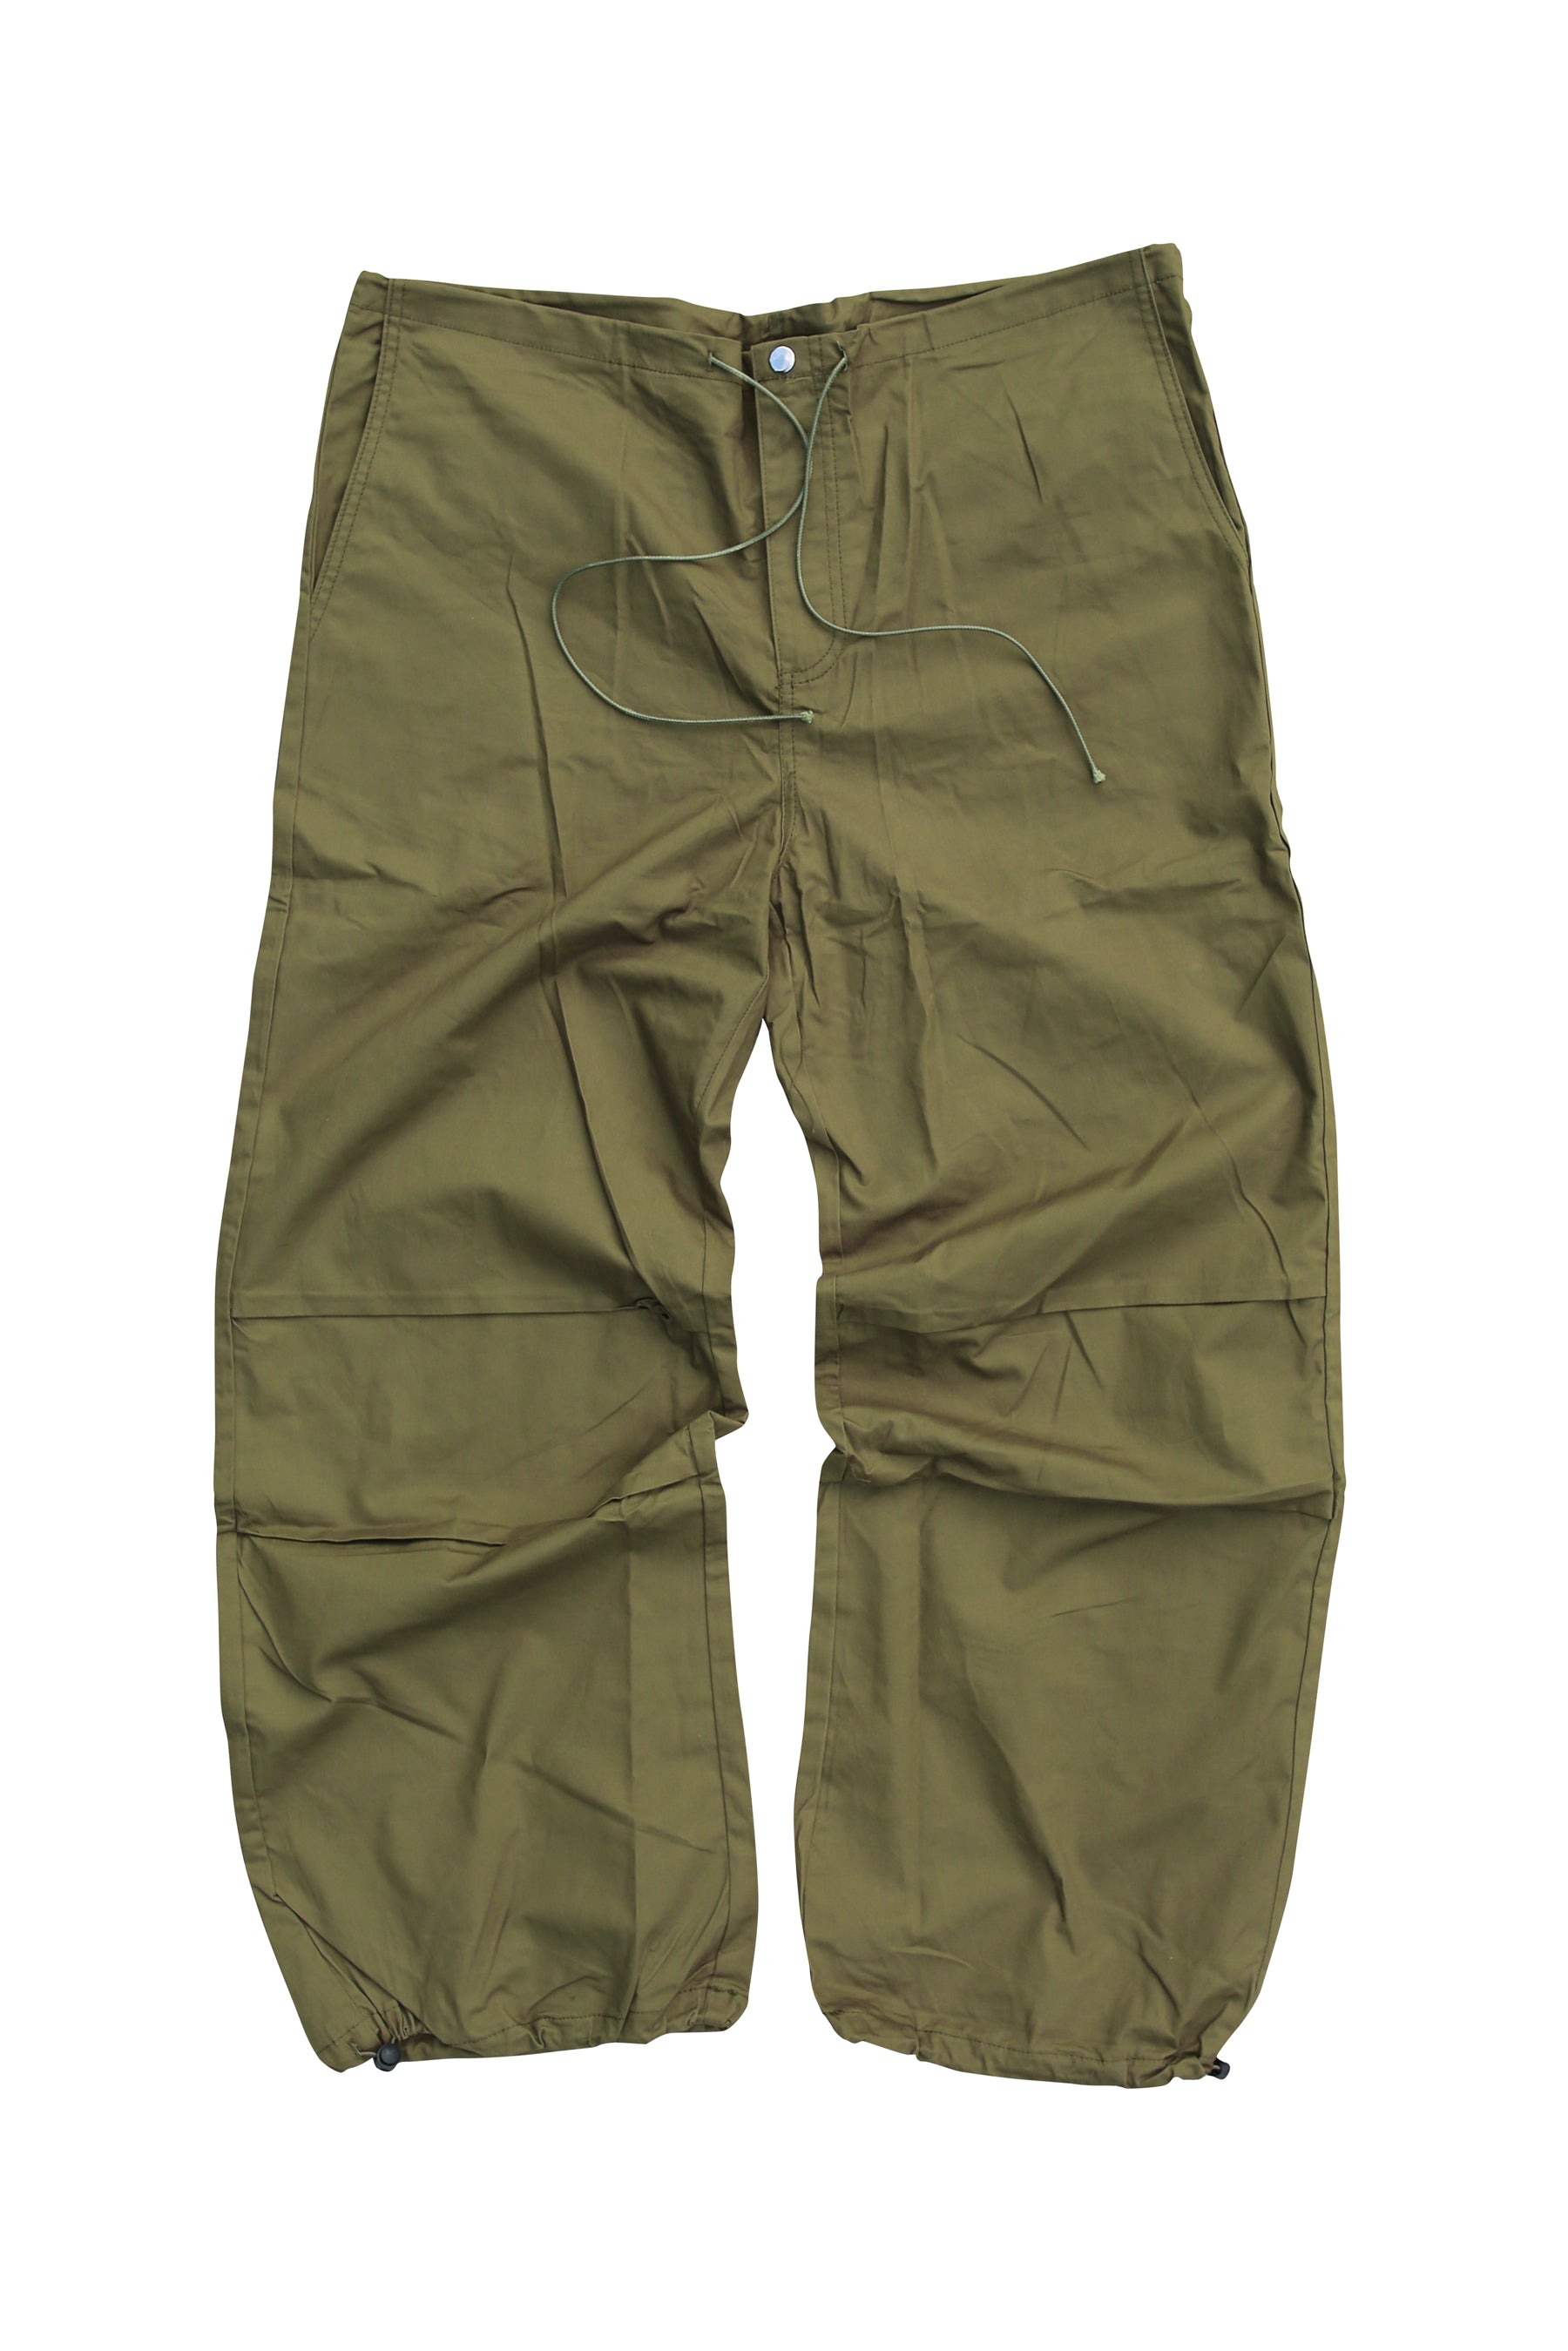 Green NOVUS Parachute Pants